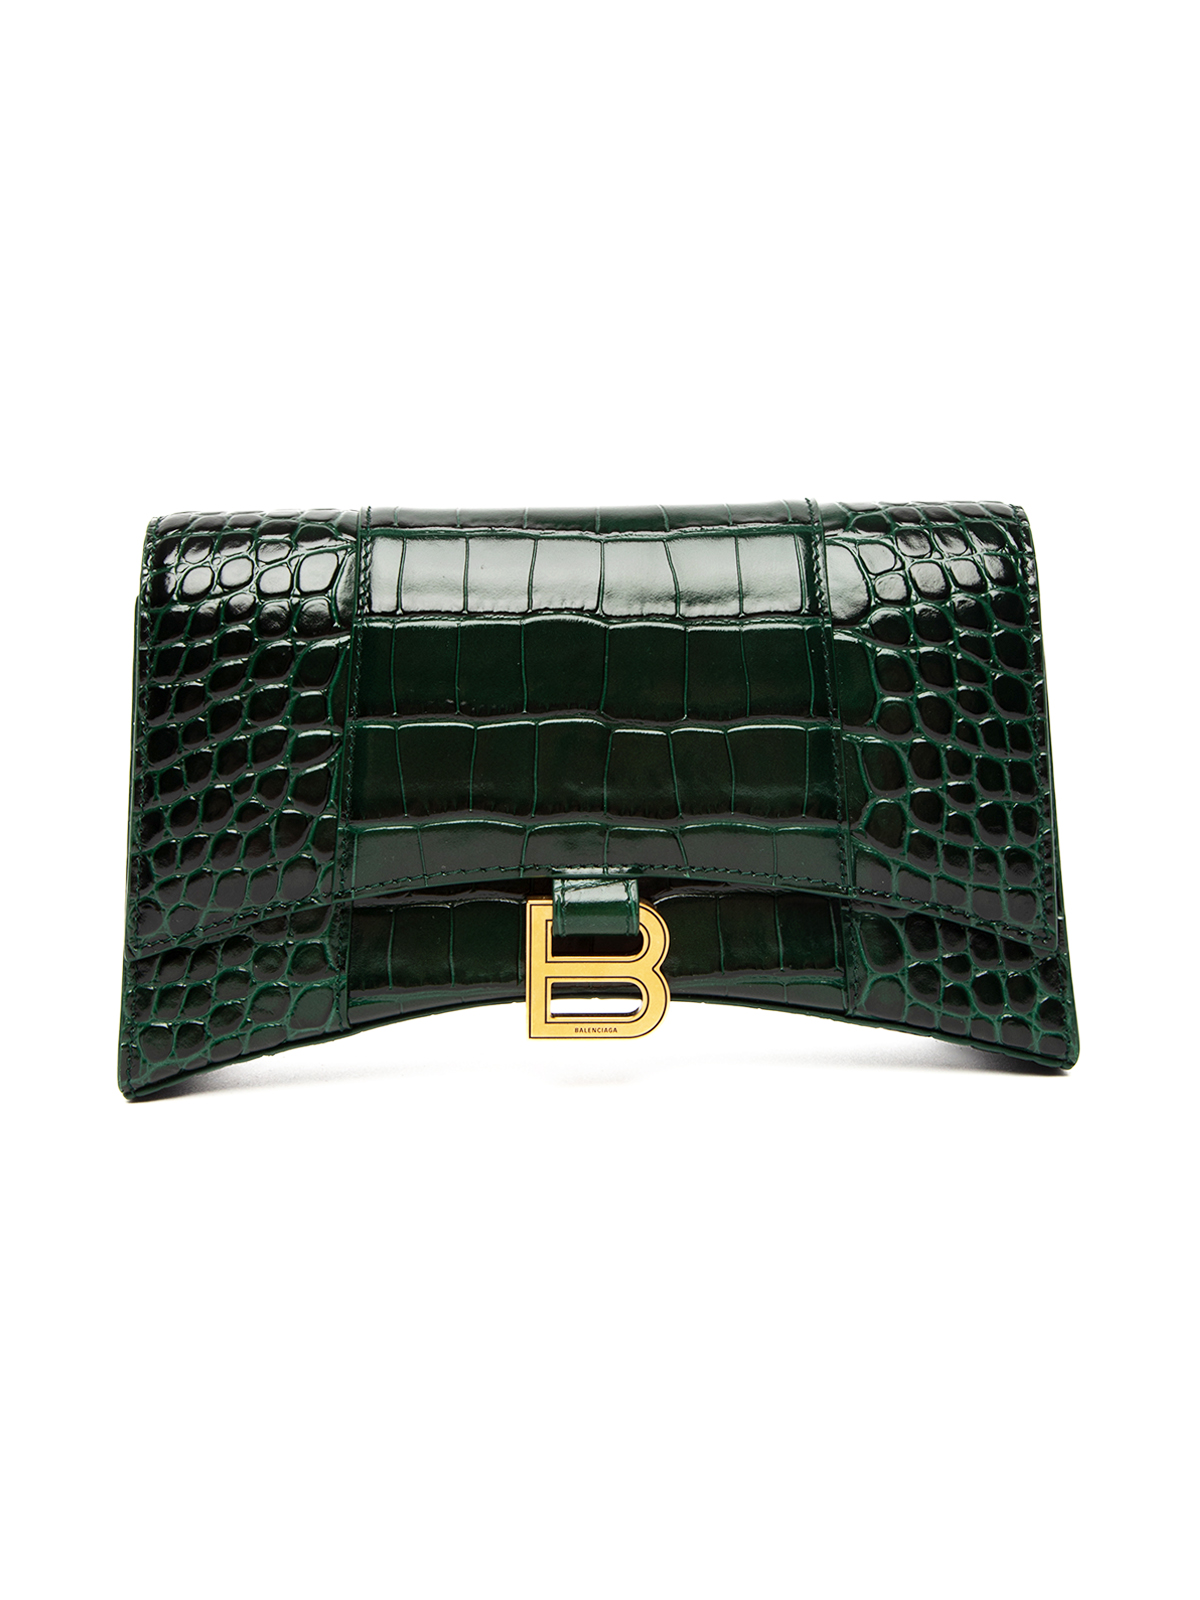 Balenciaga Emerald Green Hourglass Crocodile Effect Bag